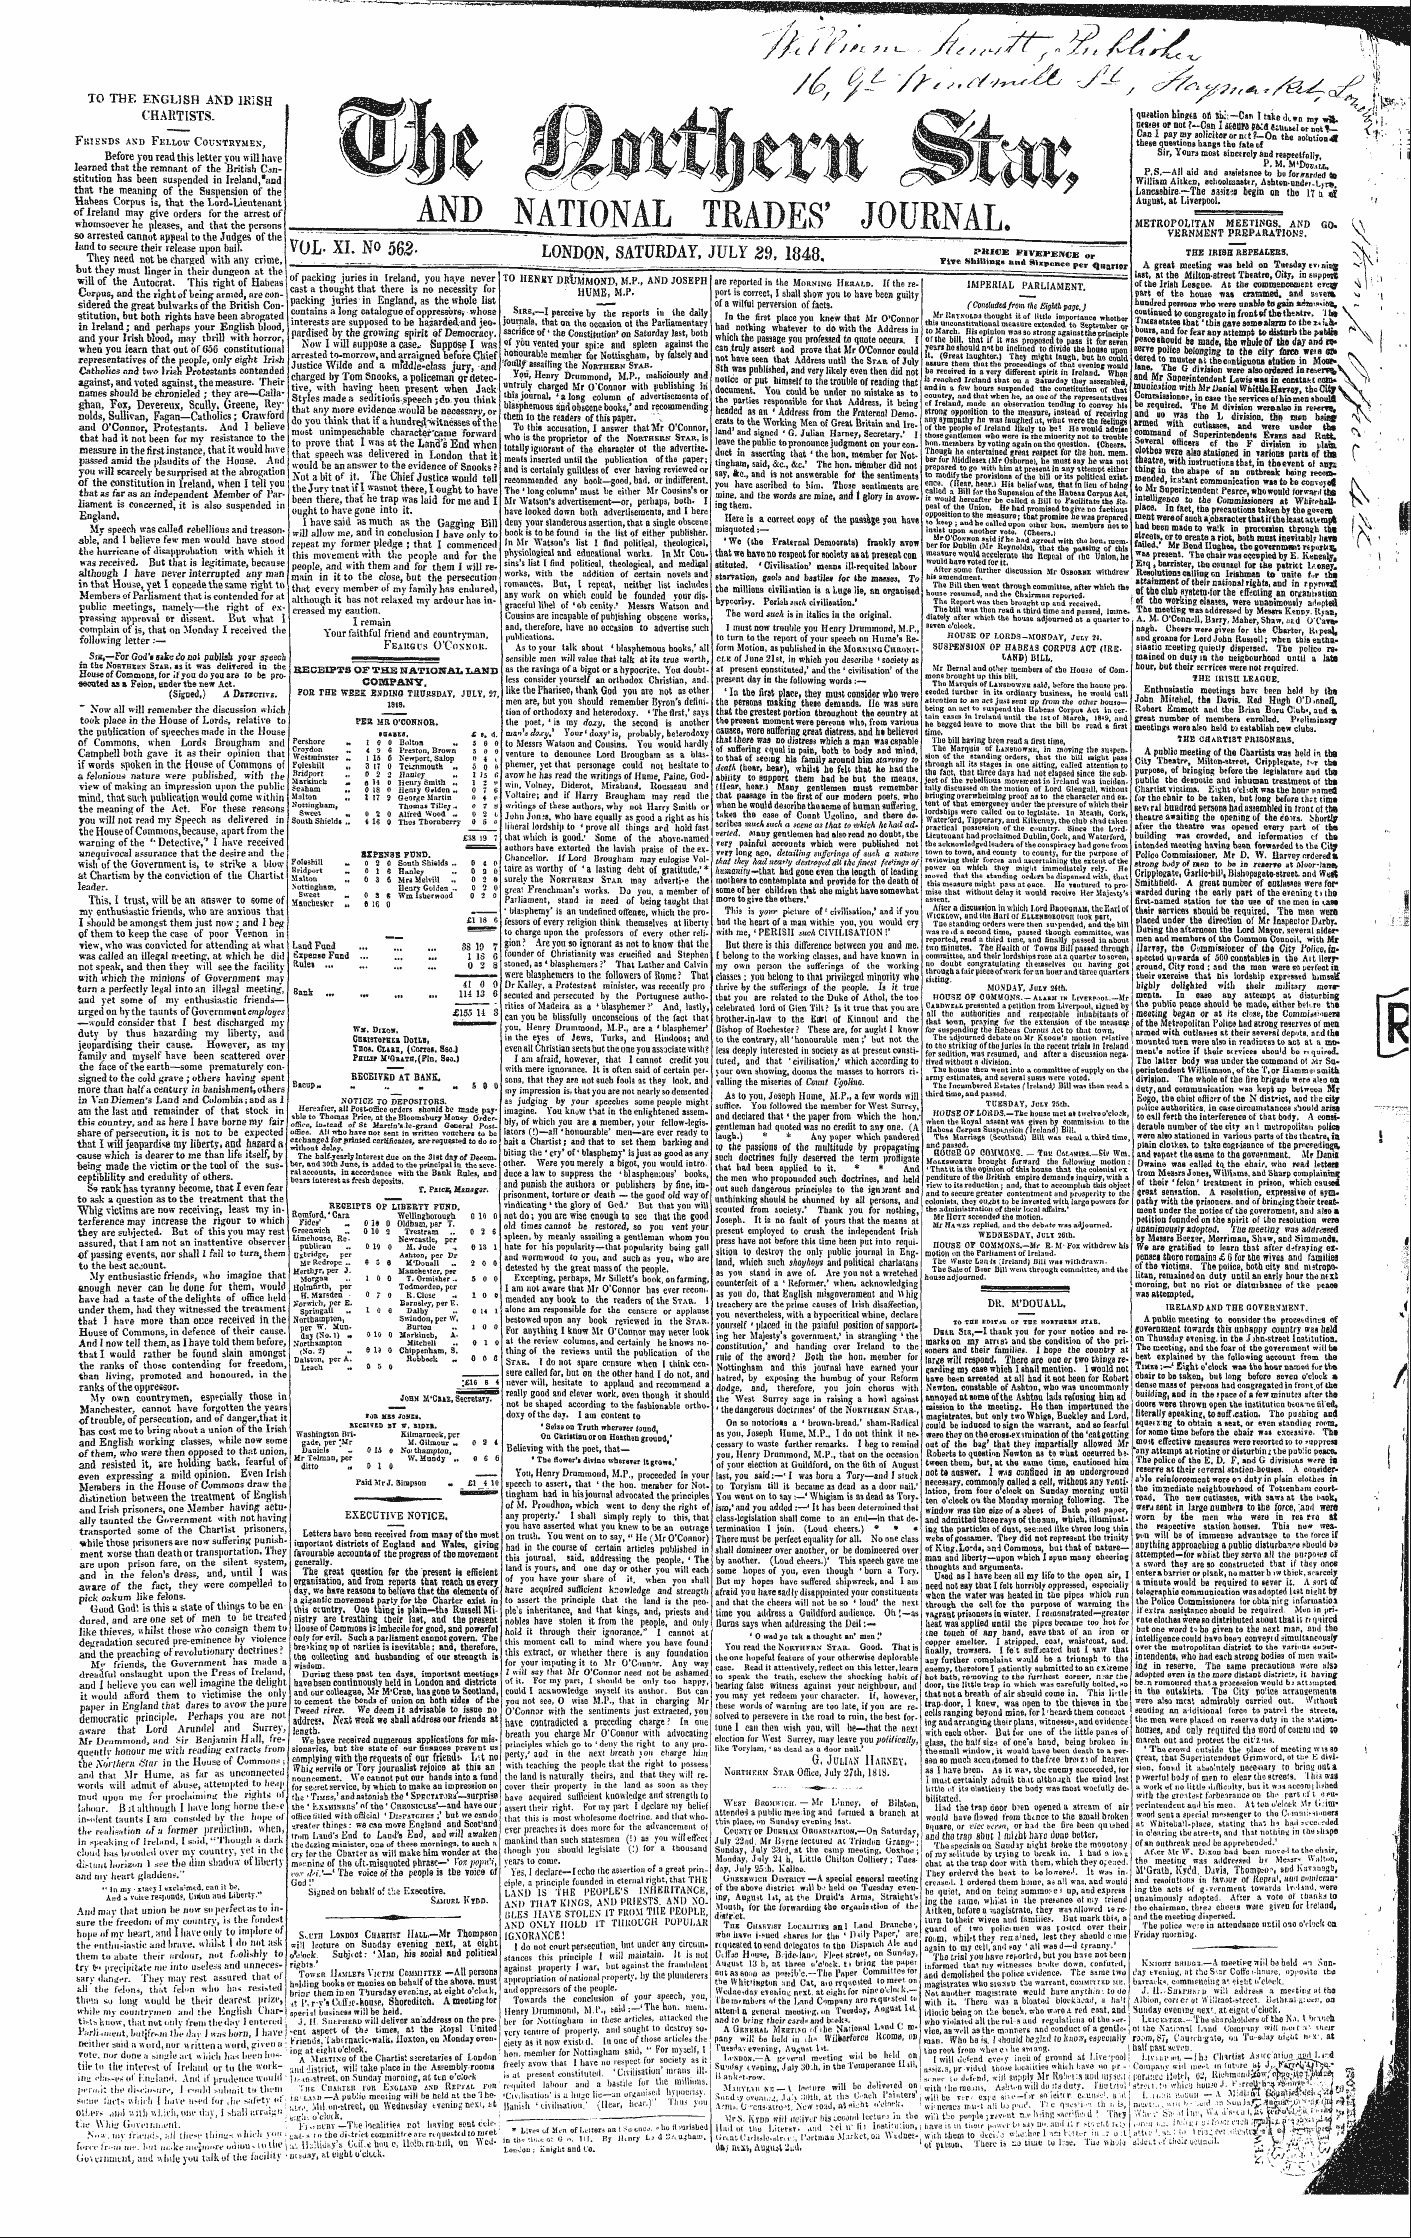 Northern Star (1837-1852): jS F Y, 4th edition - Fkiends Asd Fellow Countrymen , Before Y...